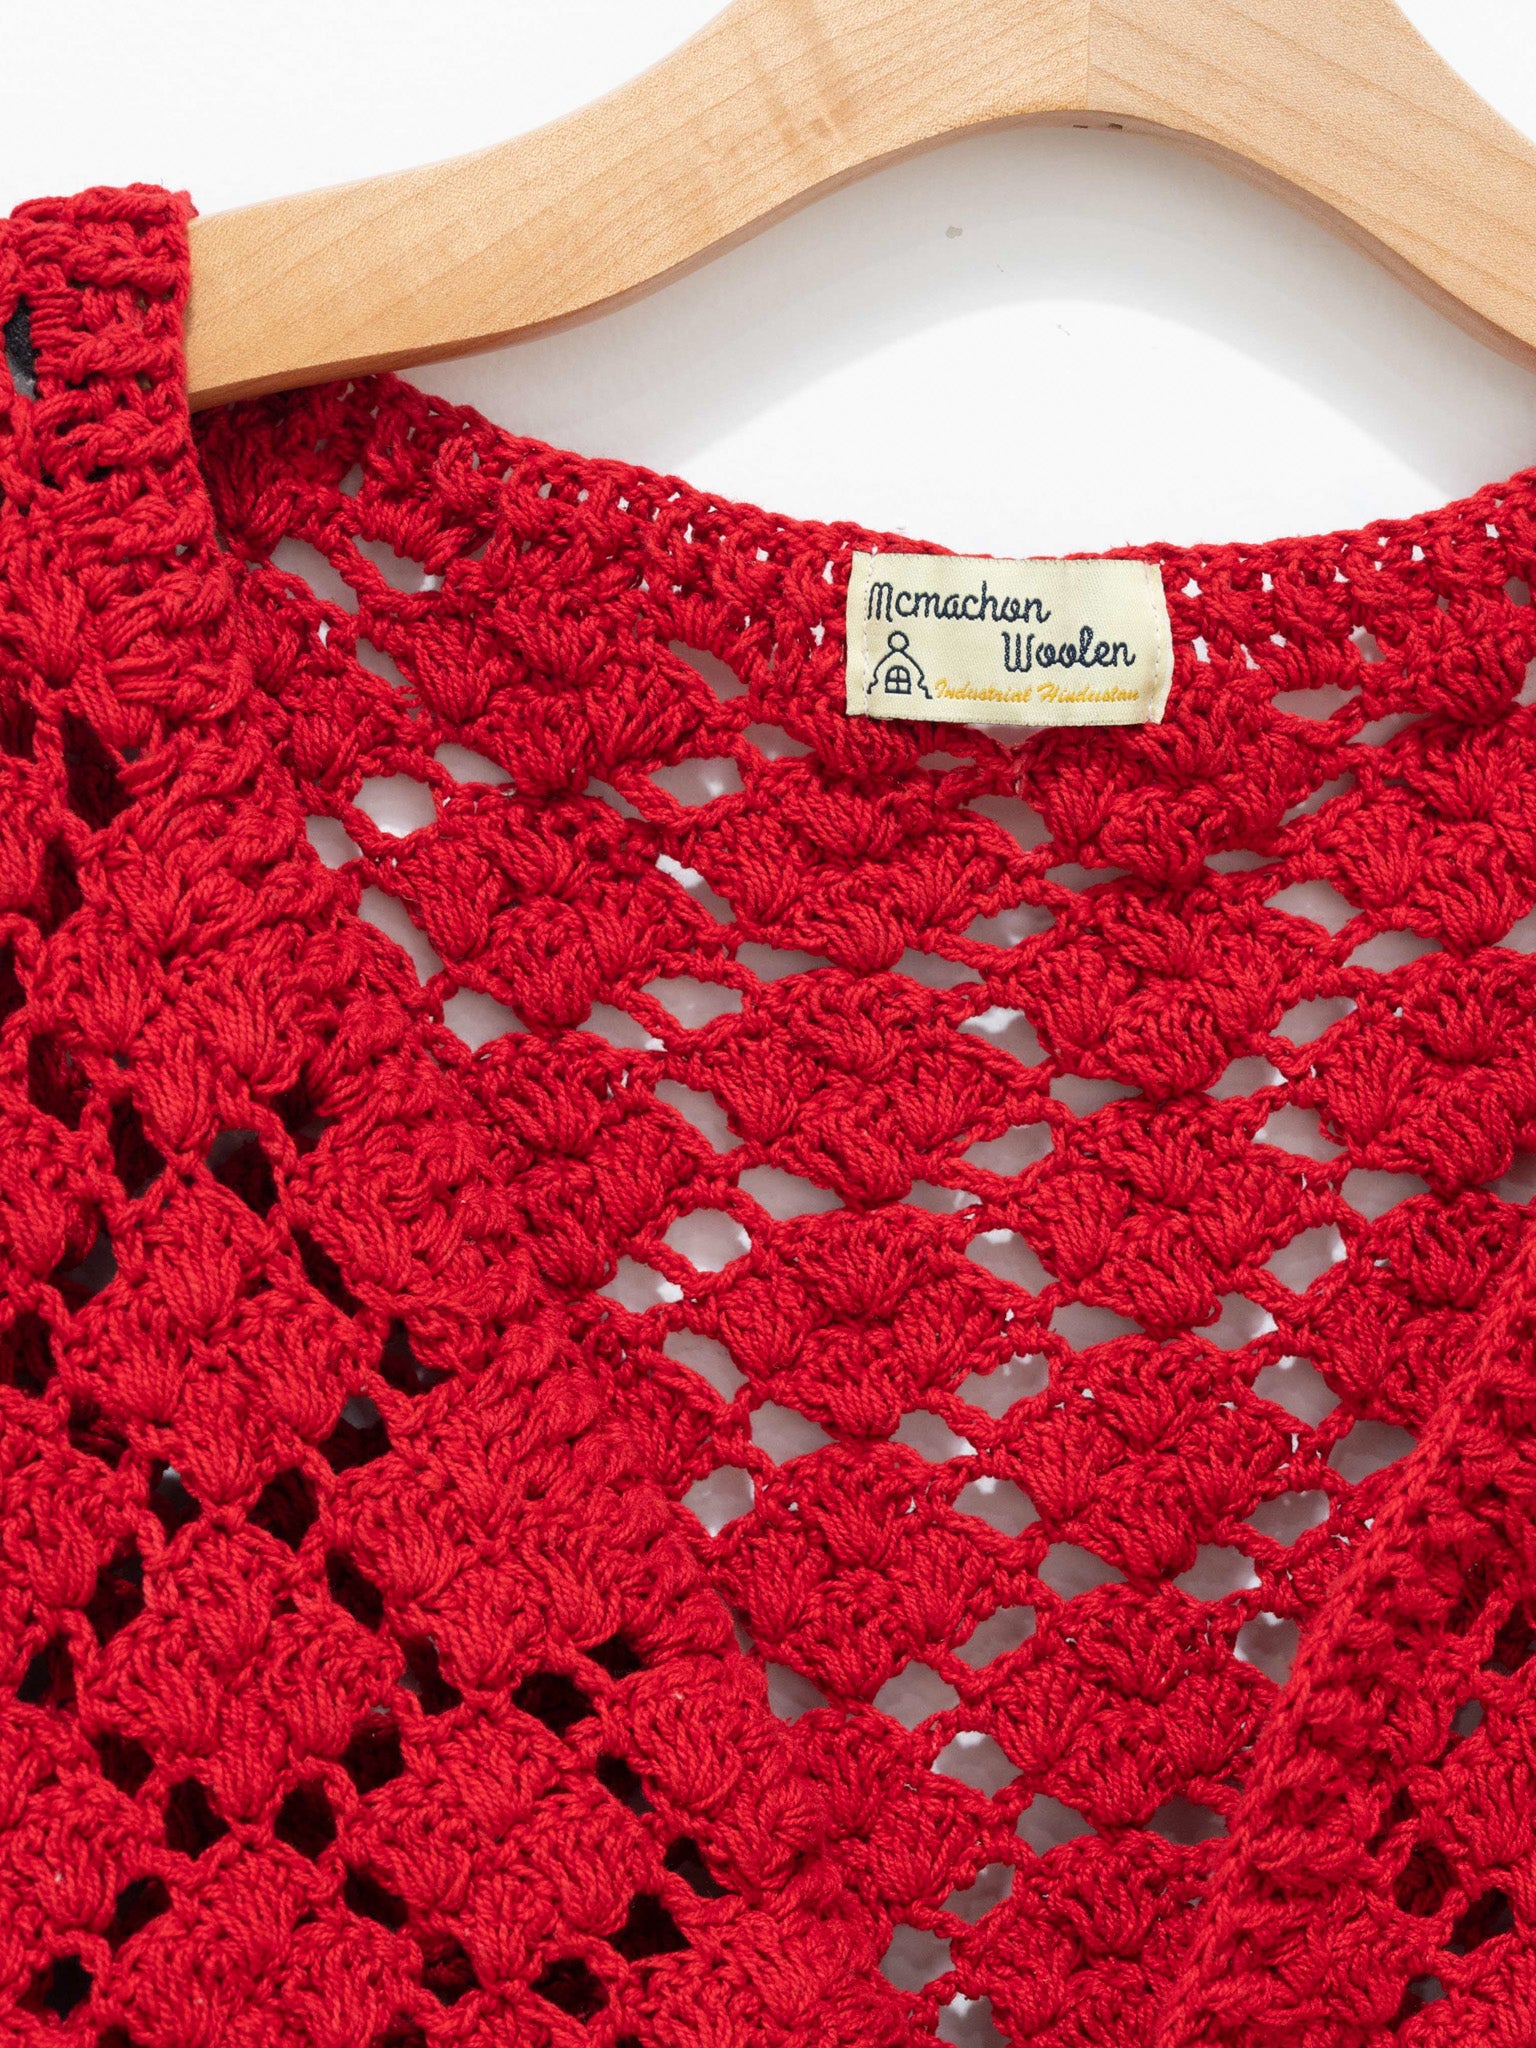 St. John crochet-knit cardigan - Red